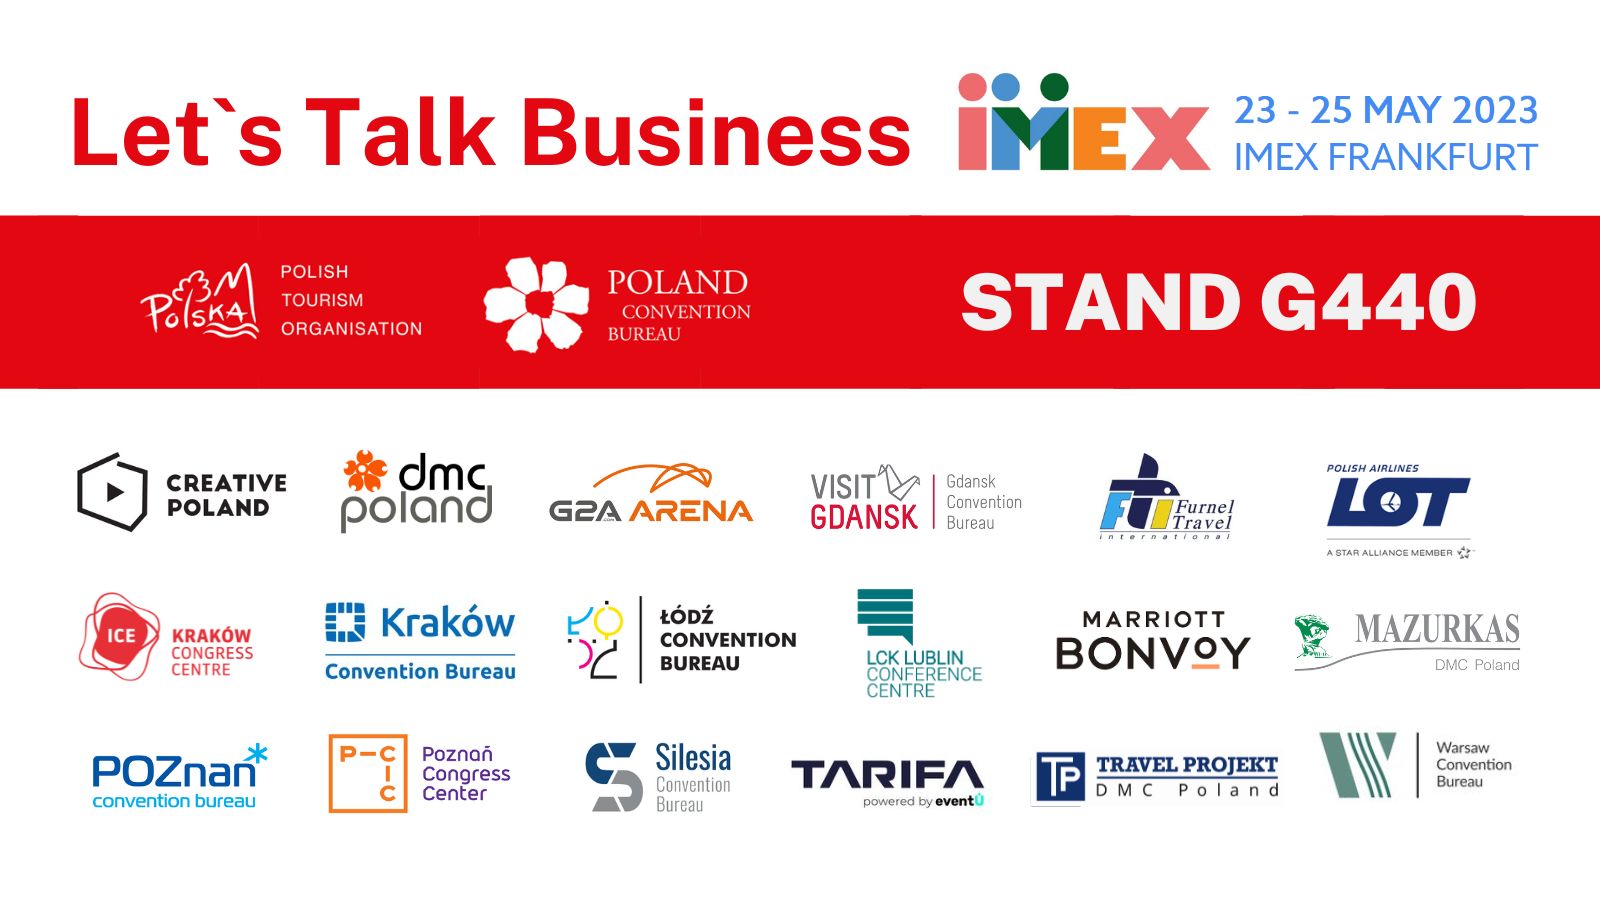 001-lets-talk-business-imex23-poland-convention-bureau-imex-frankfurt-event-polska.jpg